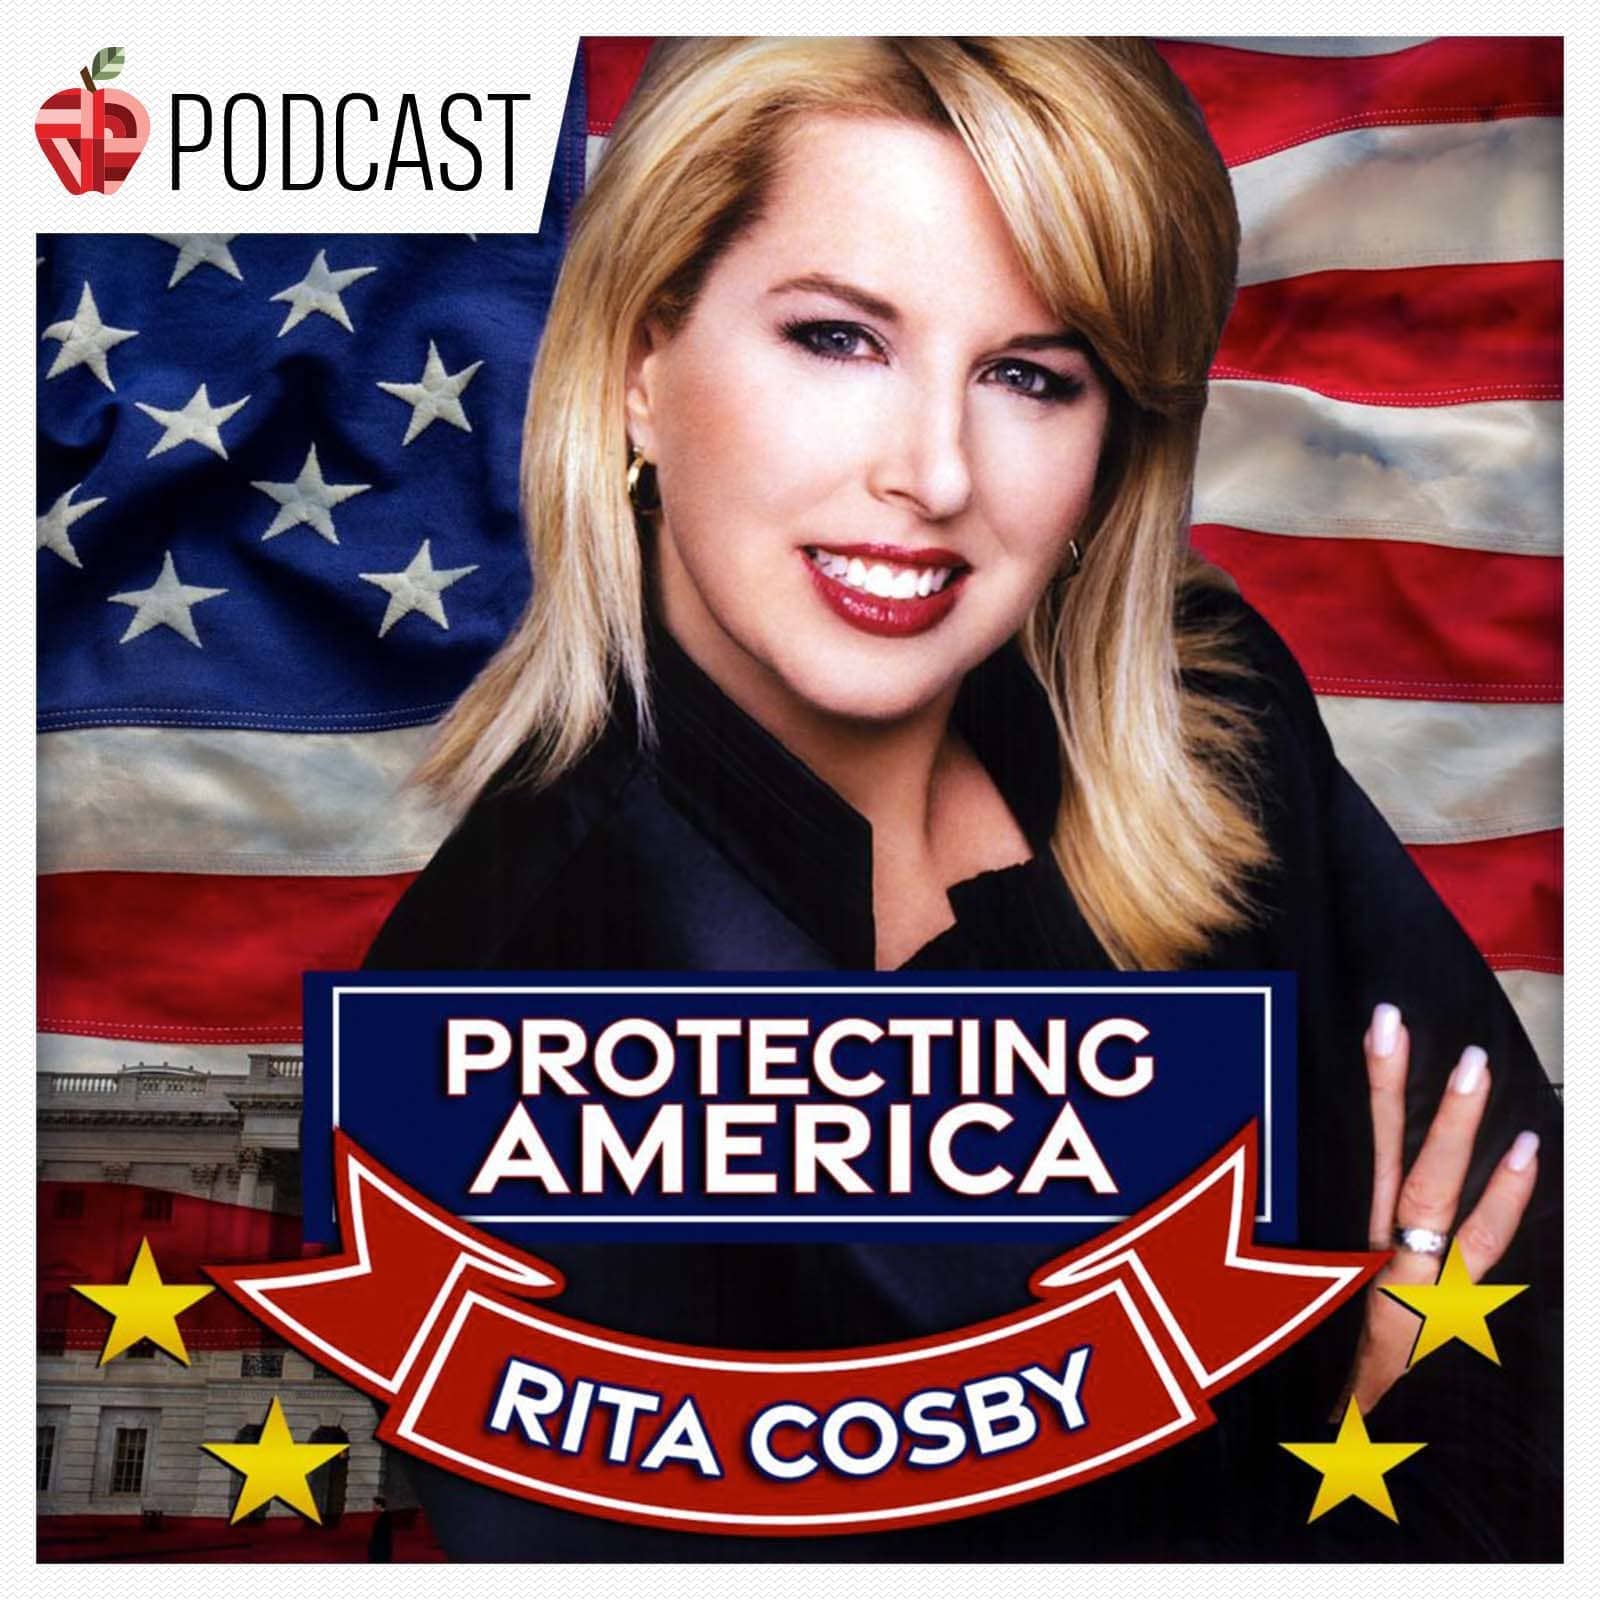 rita-cosby-protecting-america-correct-podcast-new-logo-41